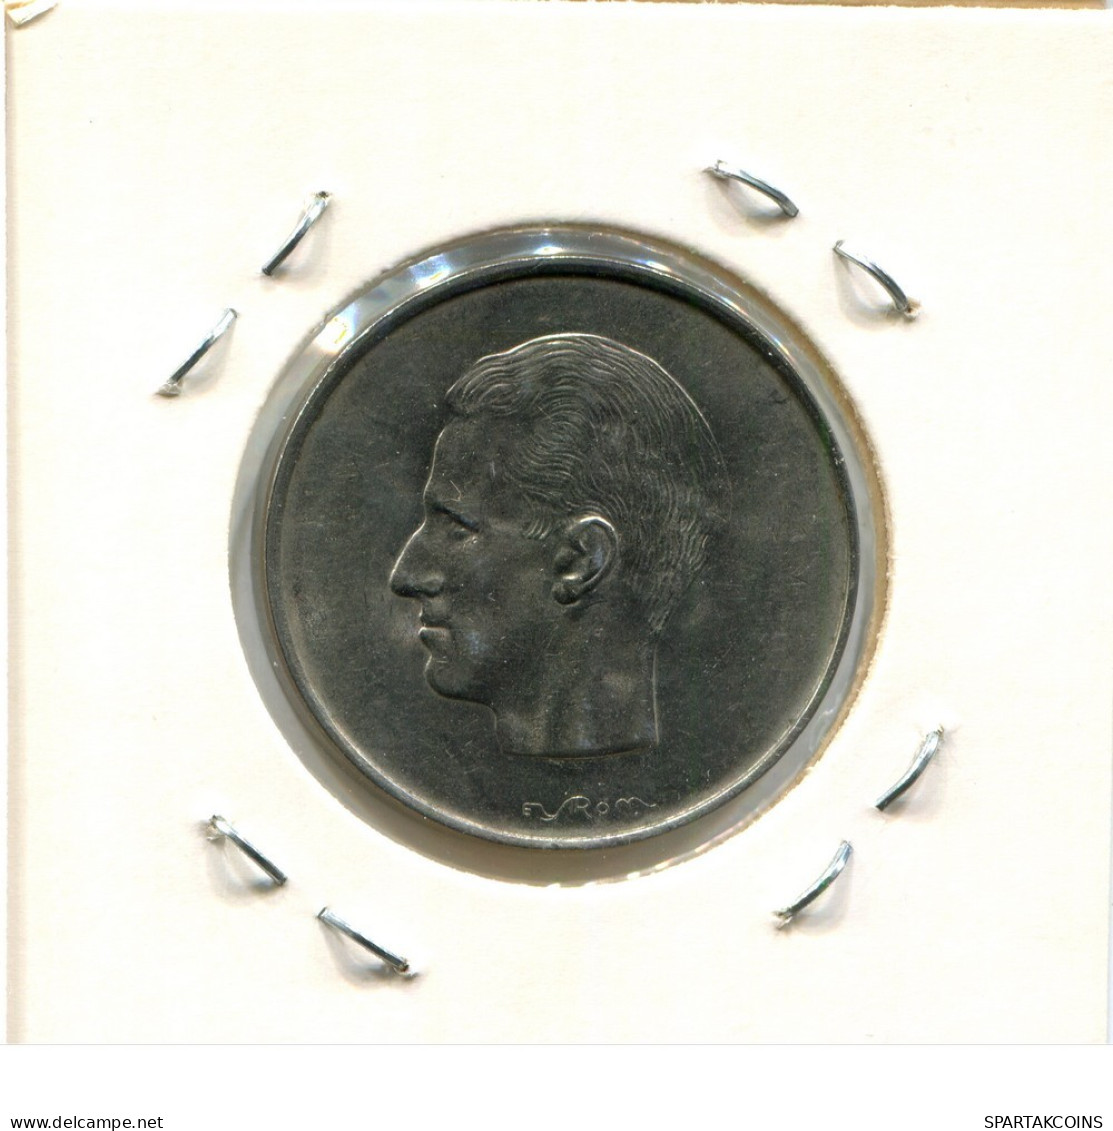 10 FRANCS 1969 FRENCH Text BELGIUM Coin #BA638.U.A - 10 Frank